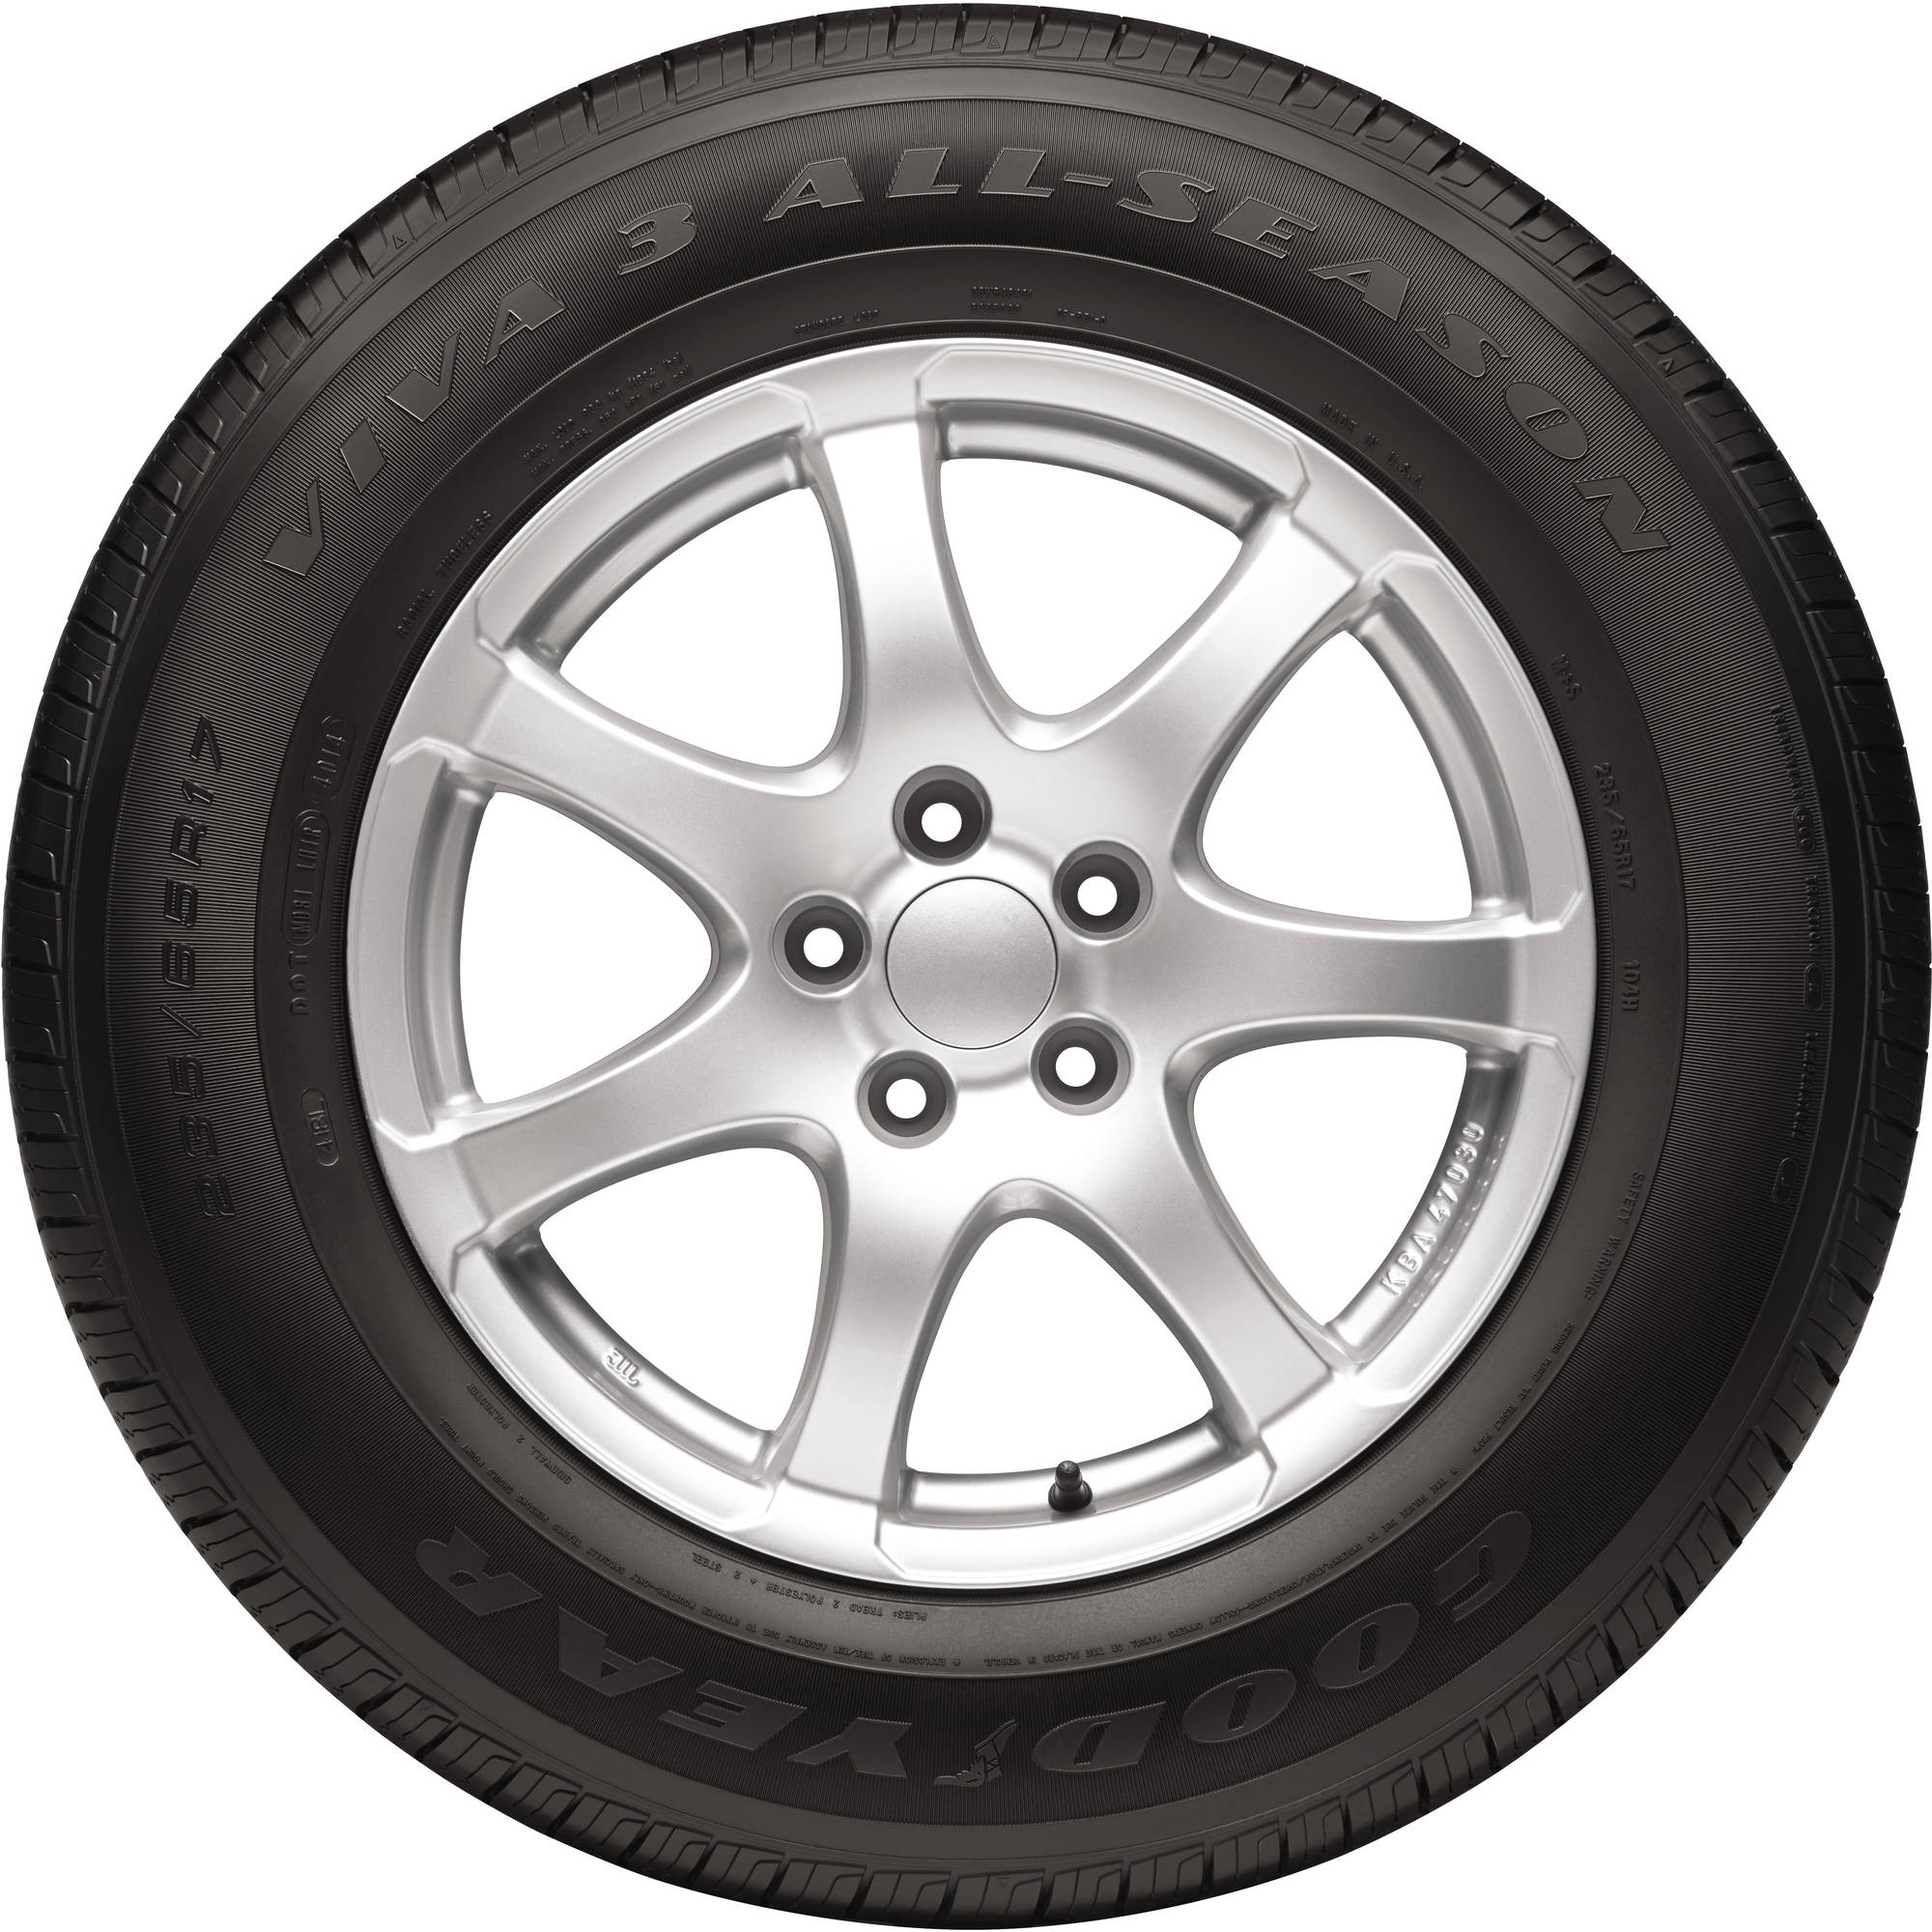 Goodyear Viva 3 All-Season Tire 225/65R17 102T - Walmart.com